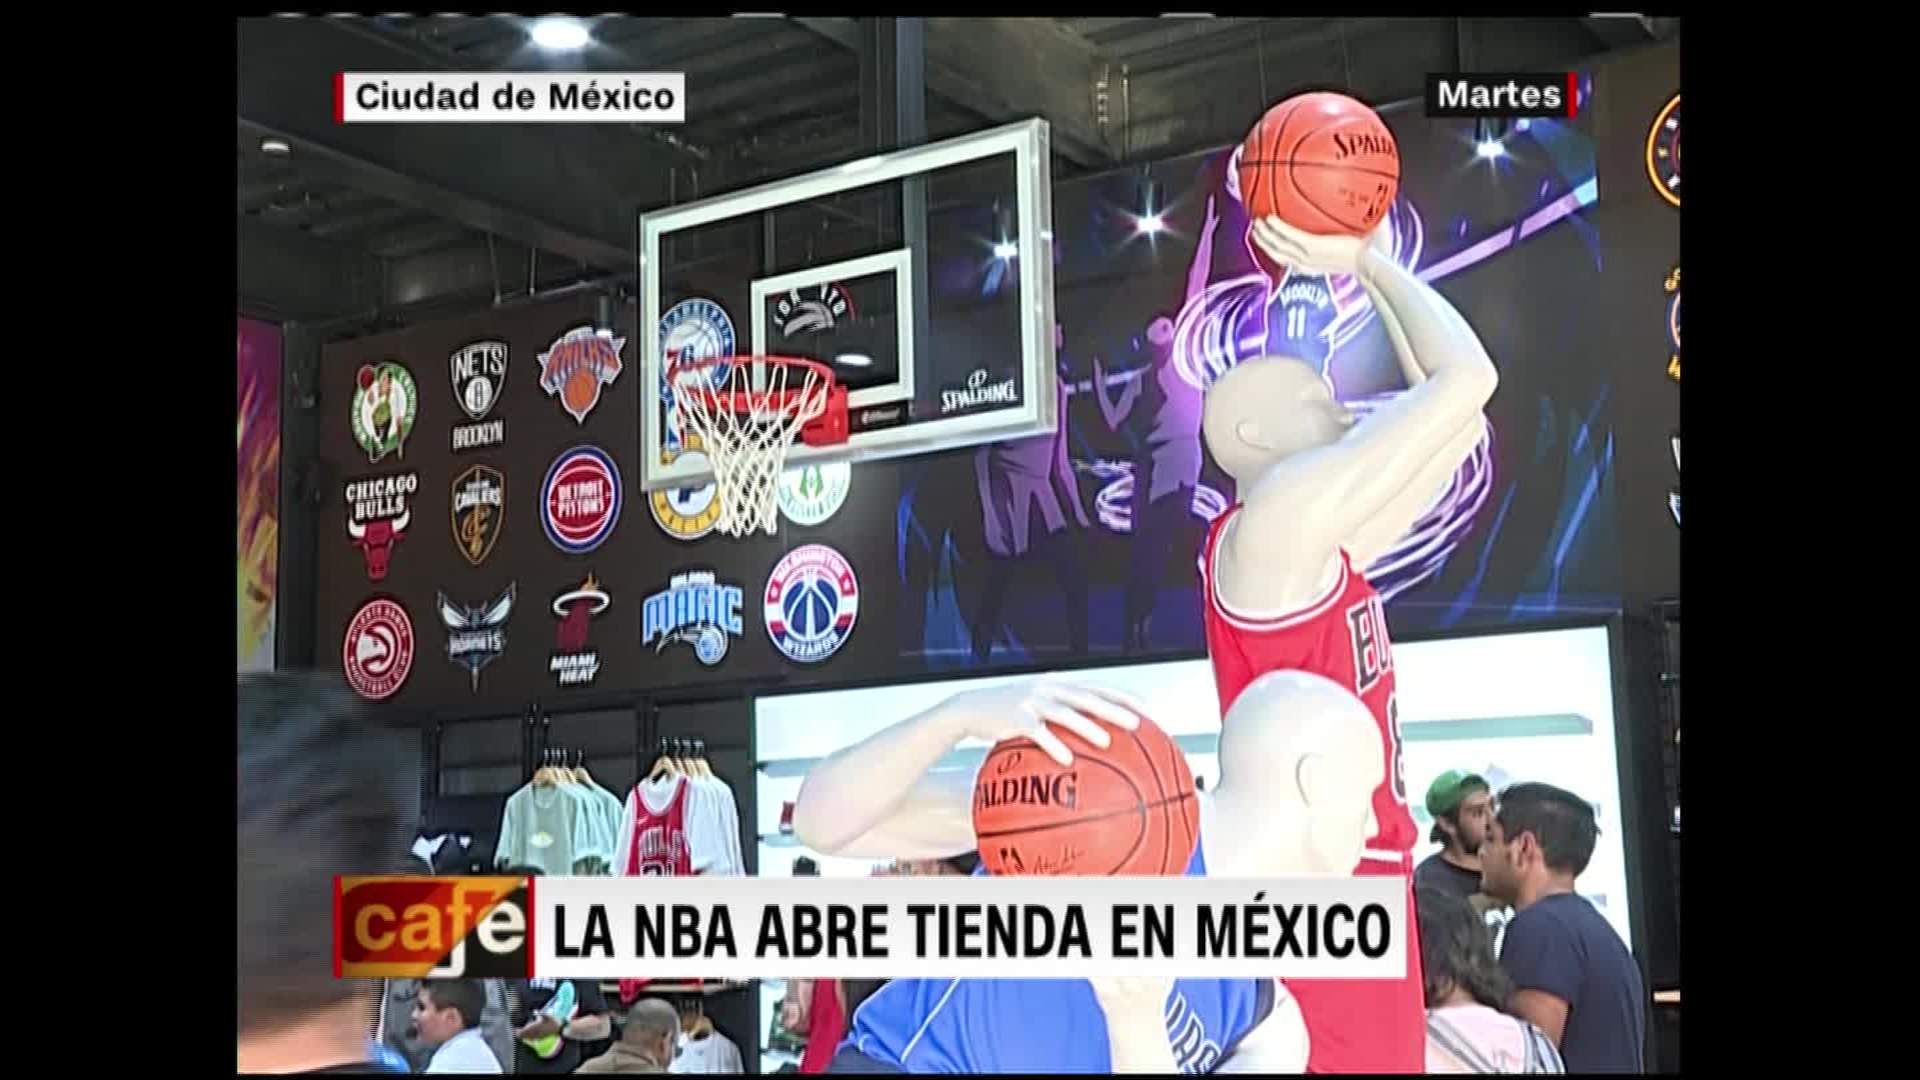 Abierto Para Negocios: NBA Opens Store in Mexico City